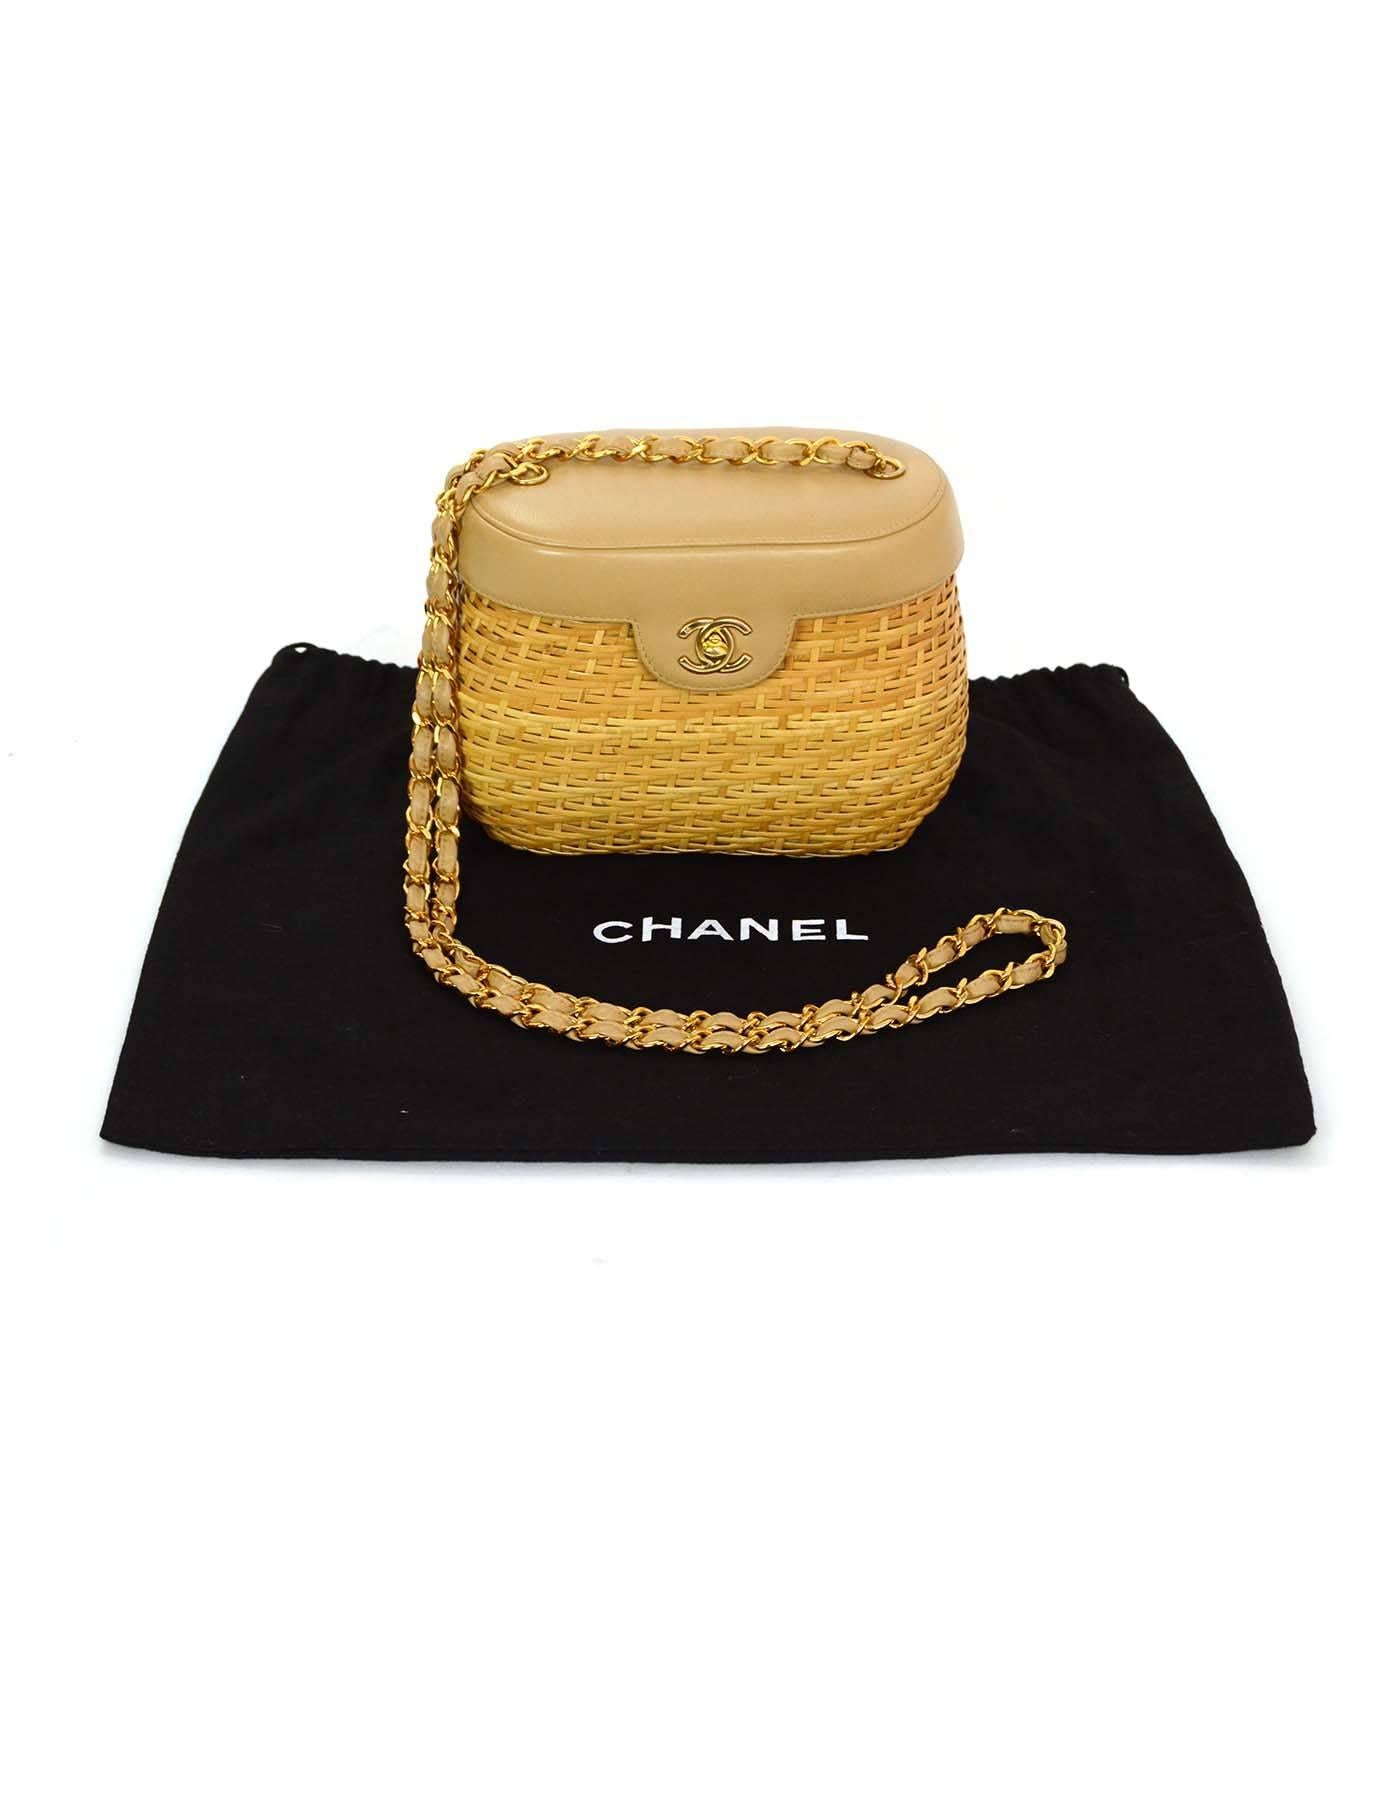 Chanel Rare Collectors Vintage Wicker Basket Shoulder Bag 3